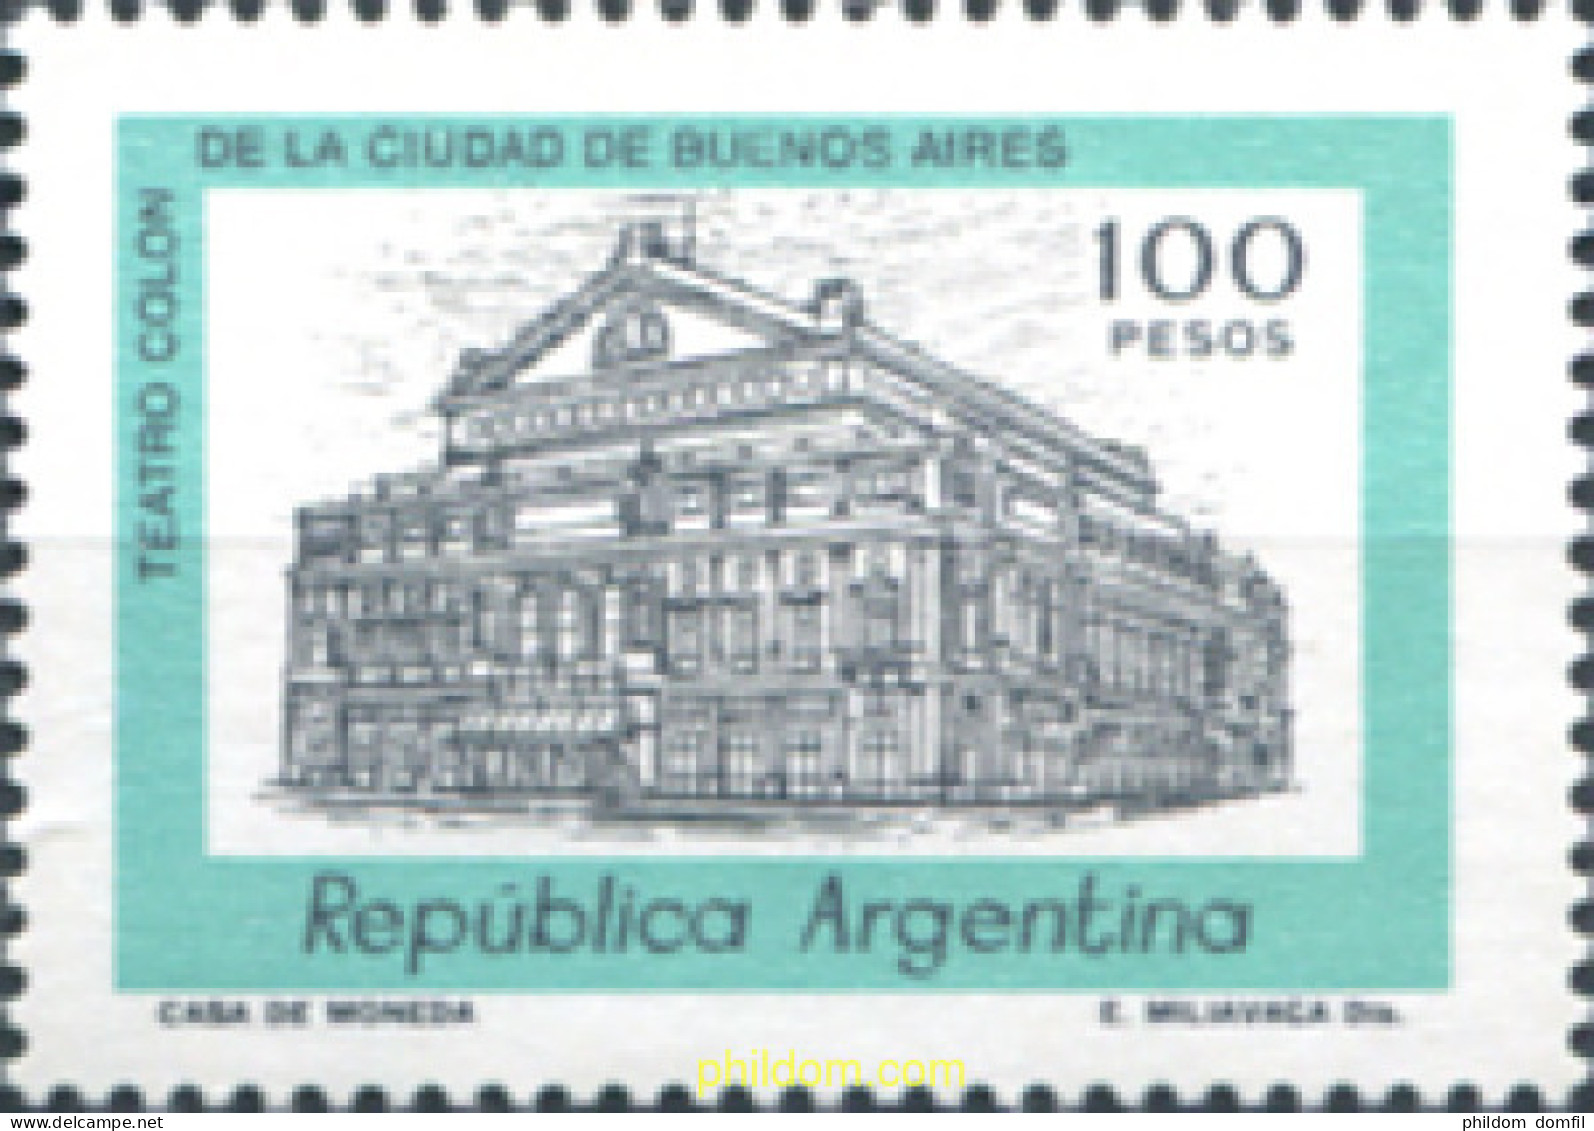 283461 MNH ARGENTINA 1981 SERIE BASICA - Neufs